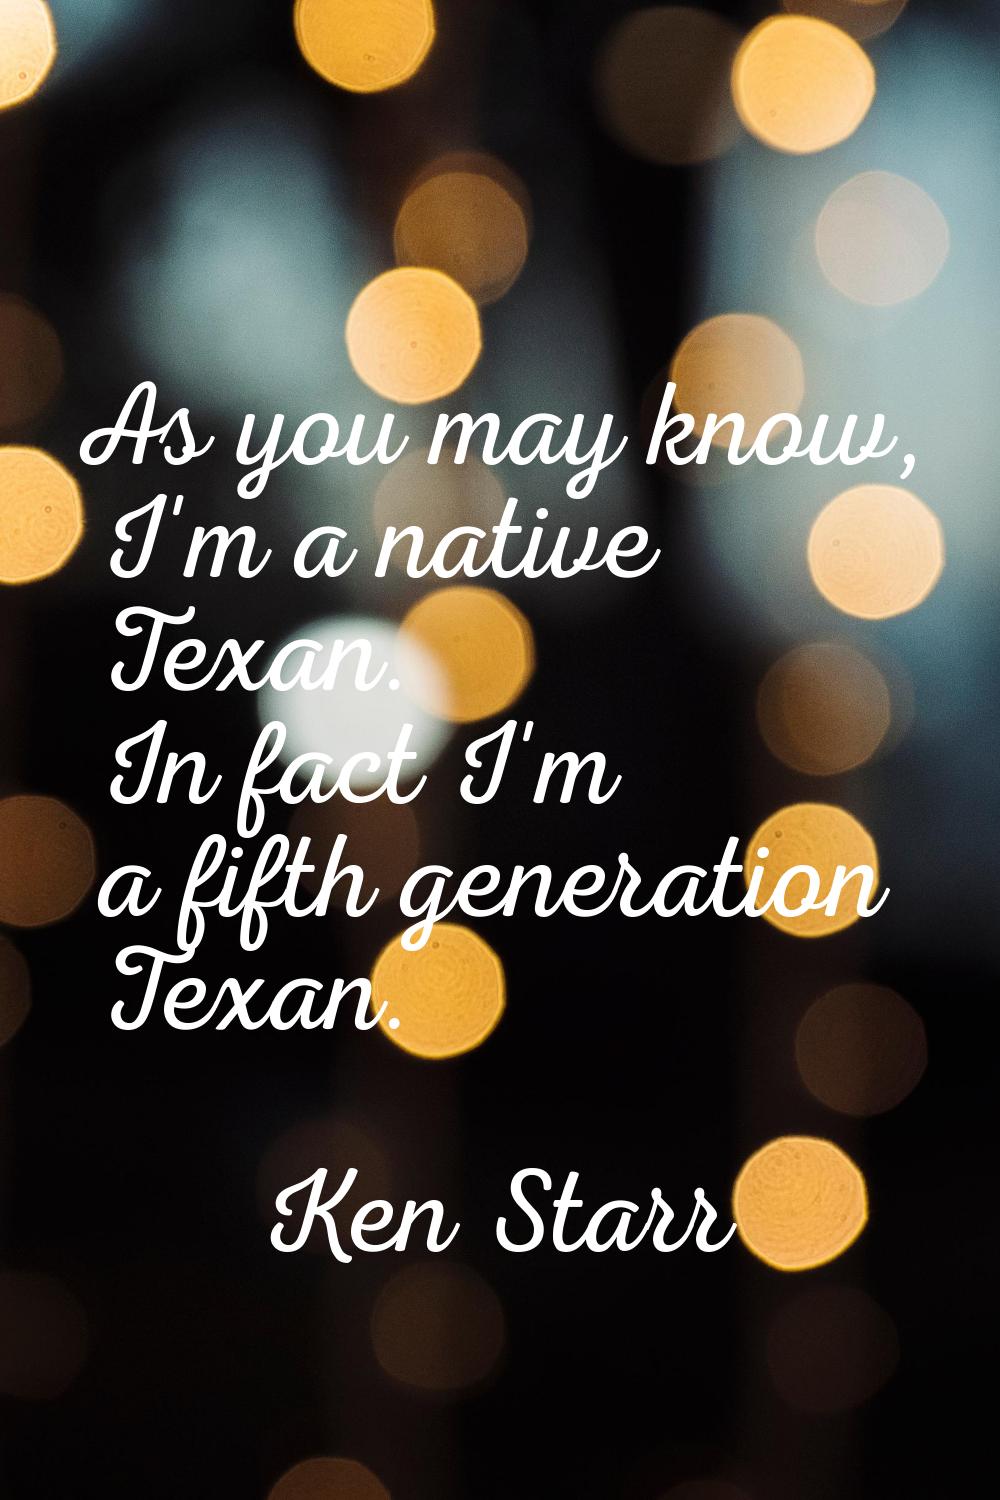 As you may know, I'm a native Texan. In fact I'm a fifth generation Texan.